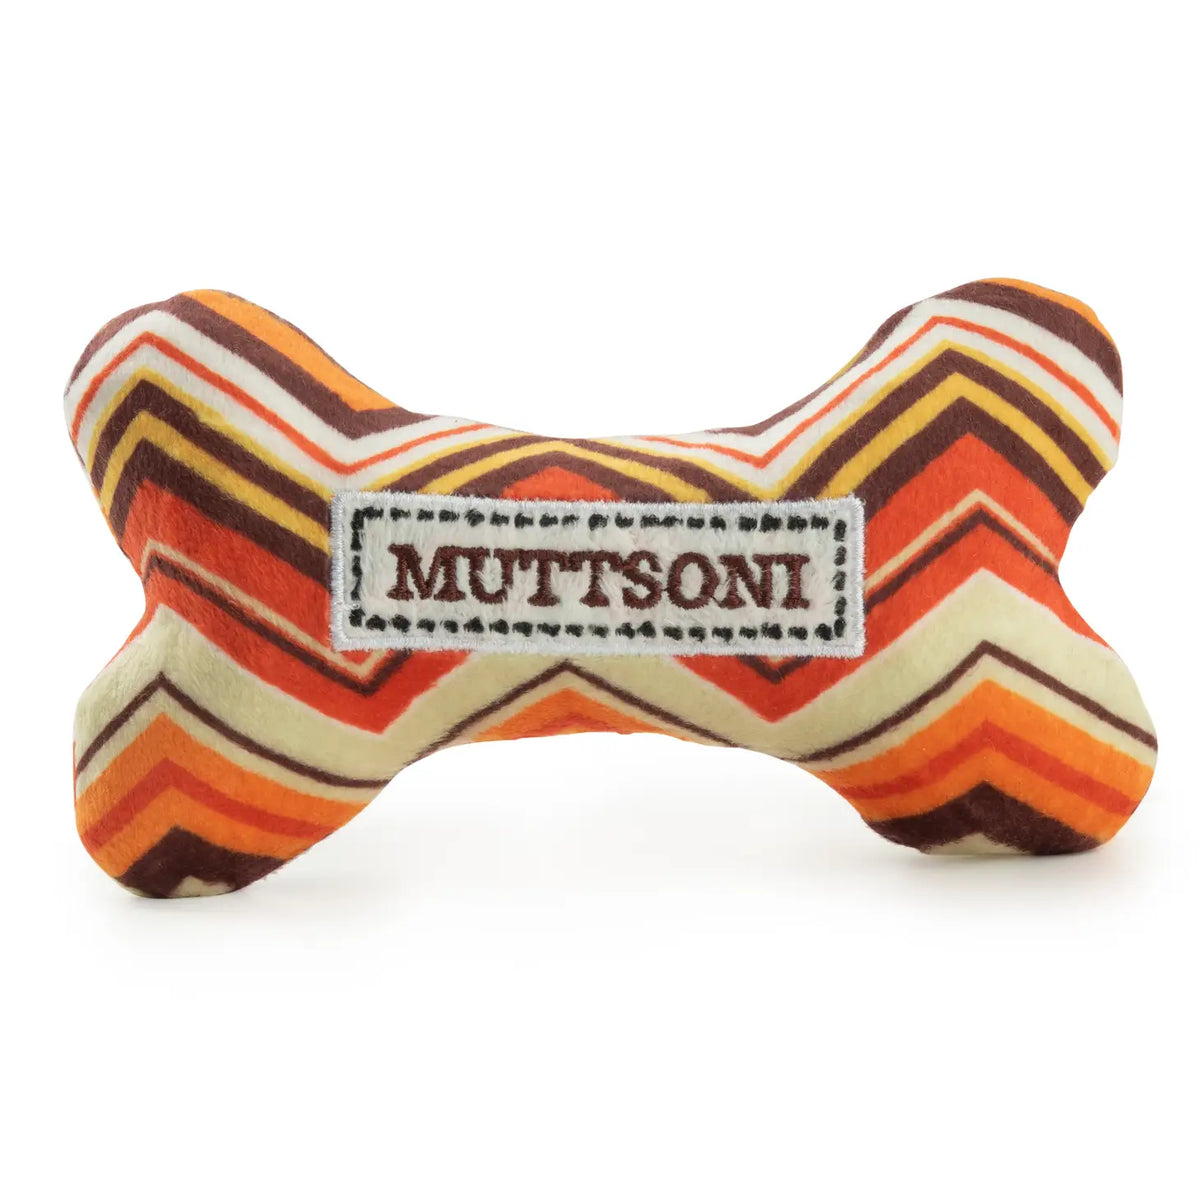 Haute Diggity Dog - Muttsoni Bone Plush Dog Toy